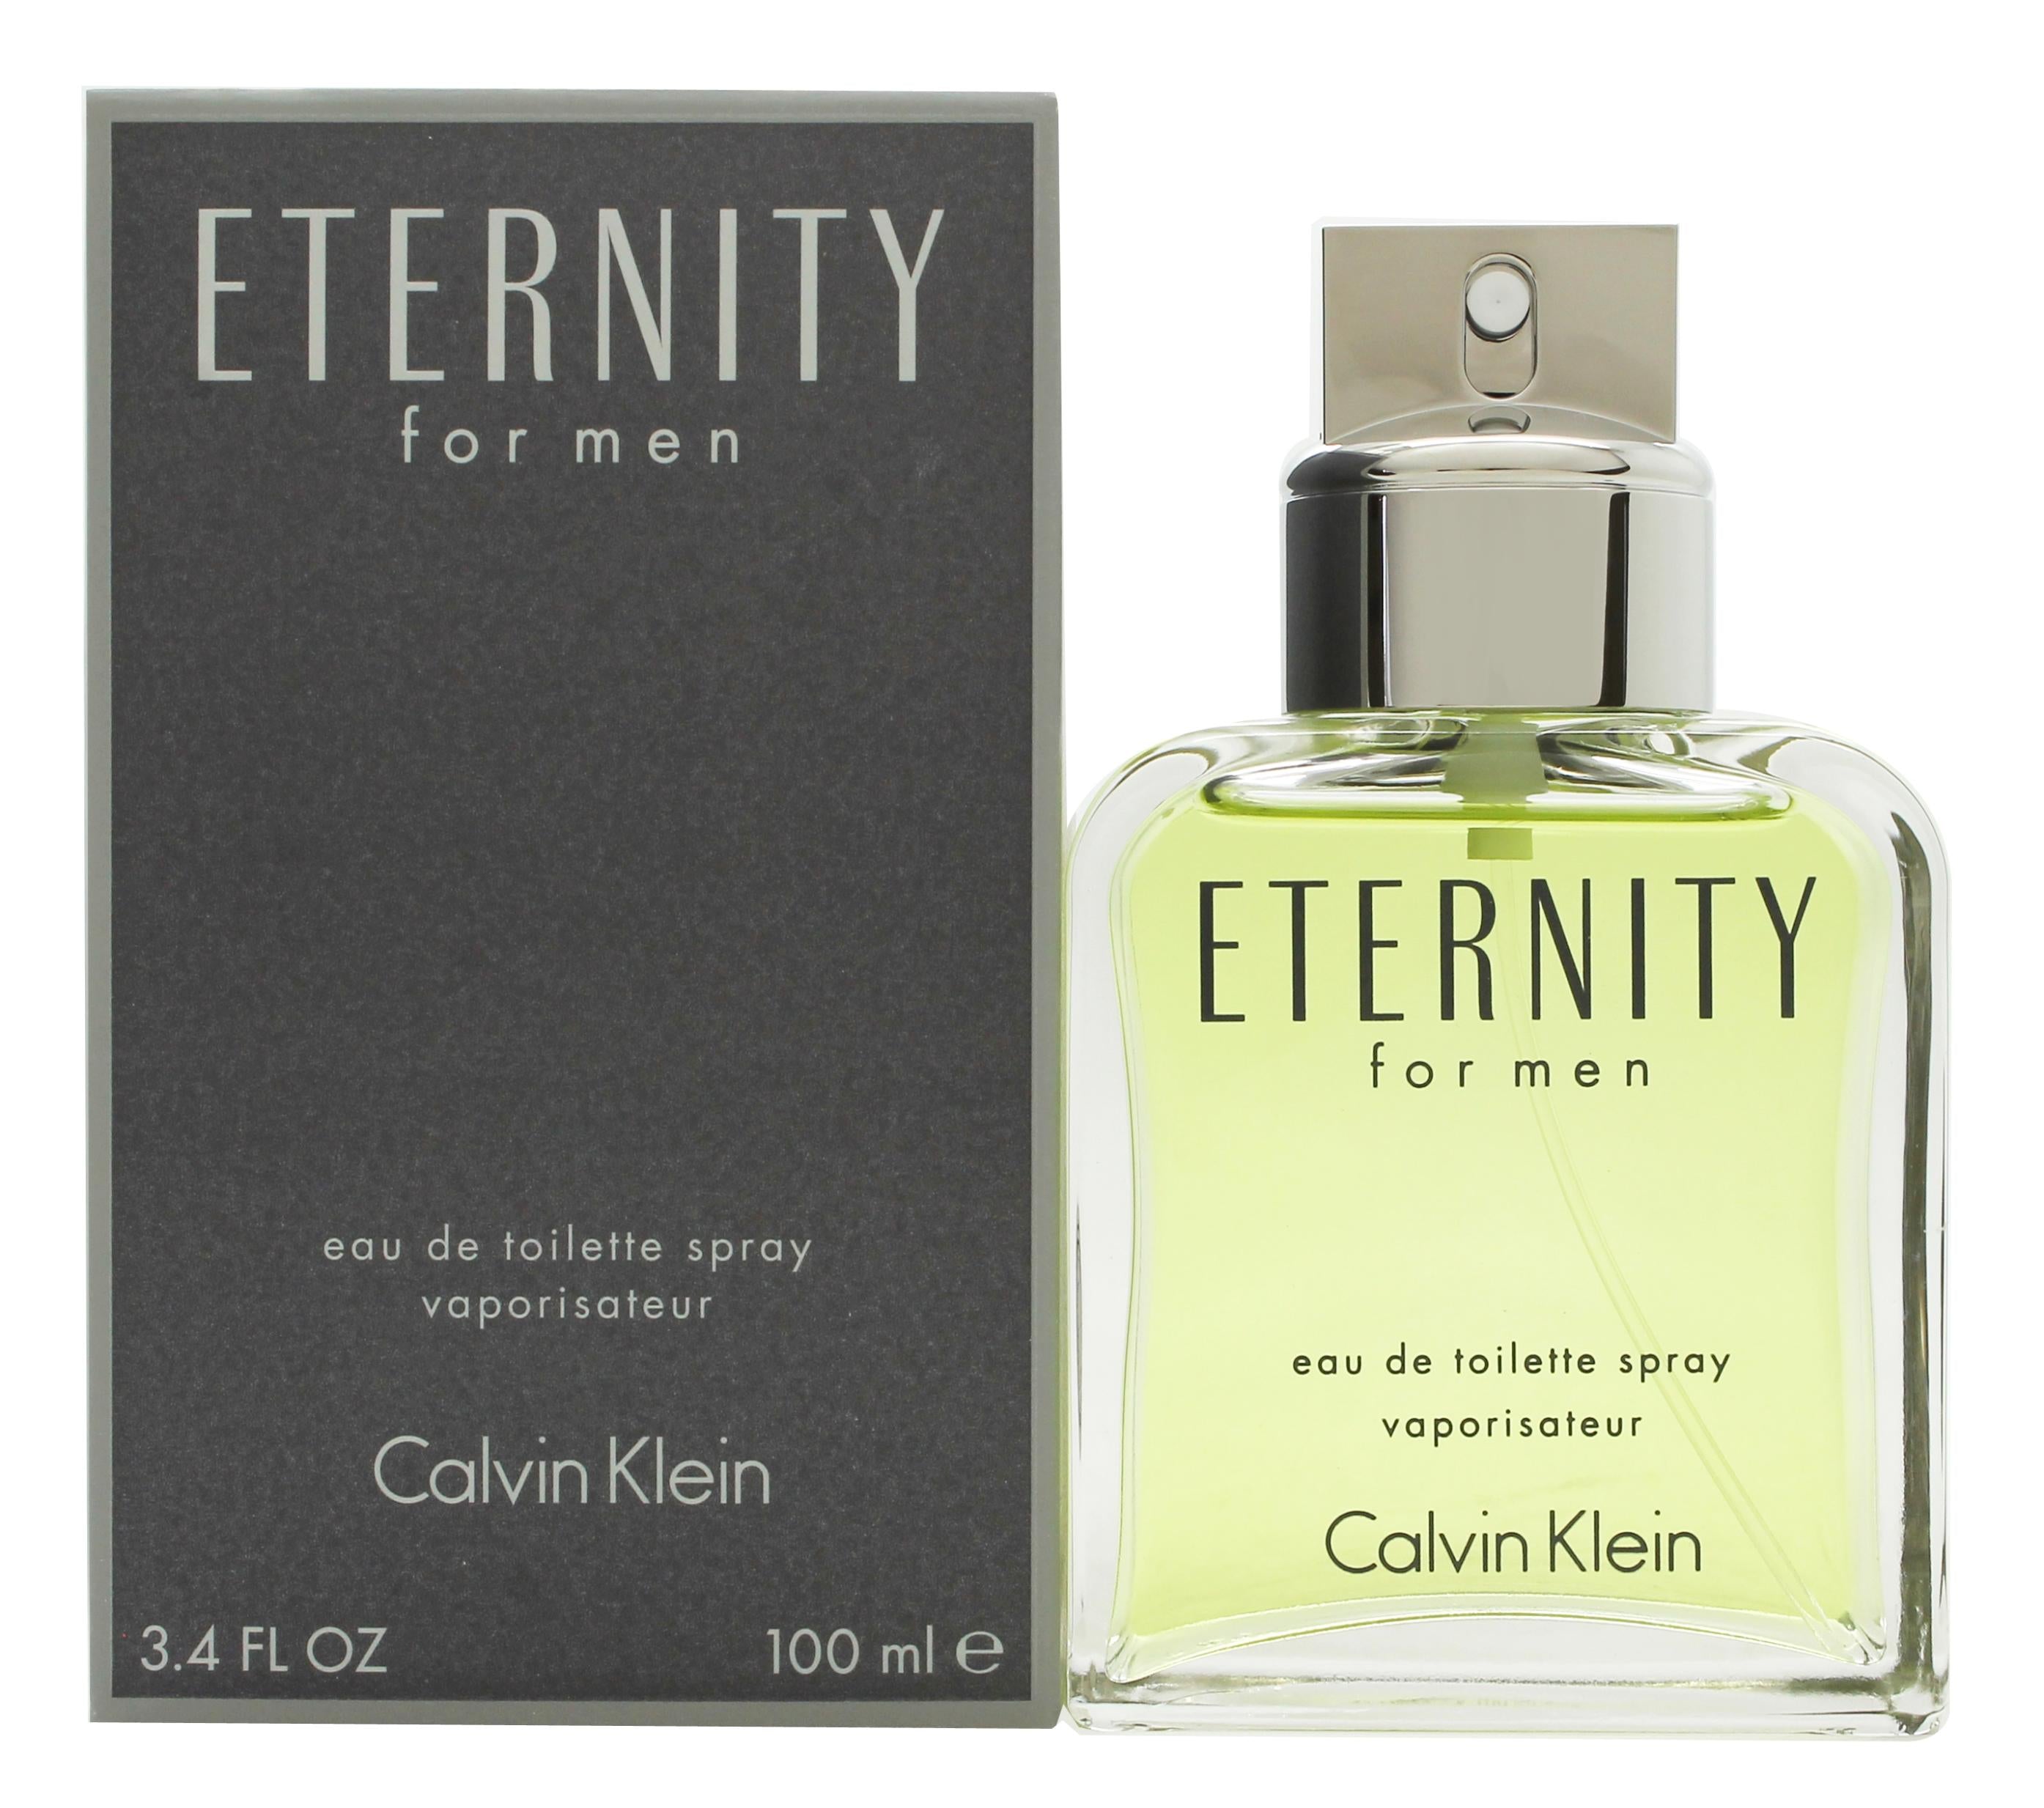 View Calvin Klein Eternity Eau de Toilette 100ml Spray information